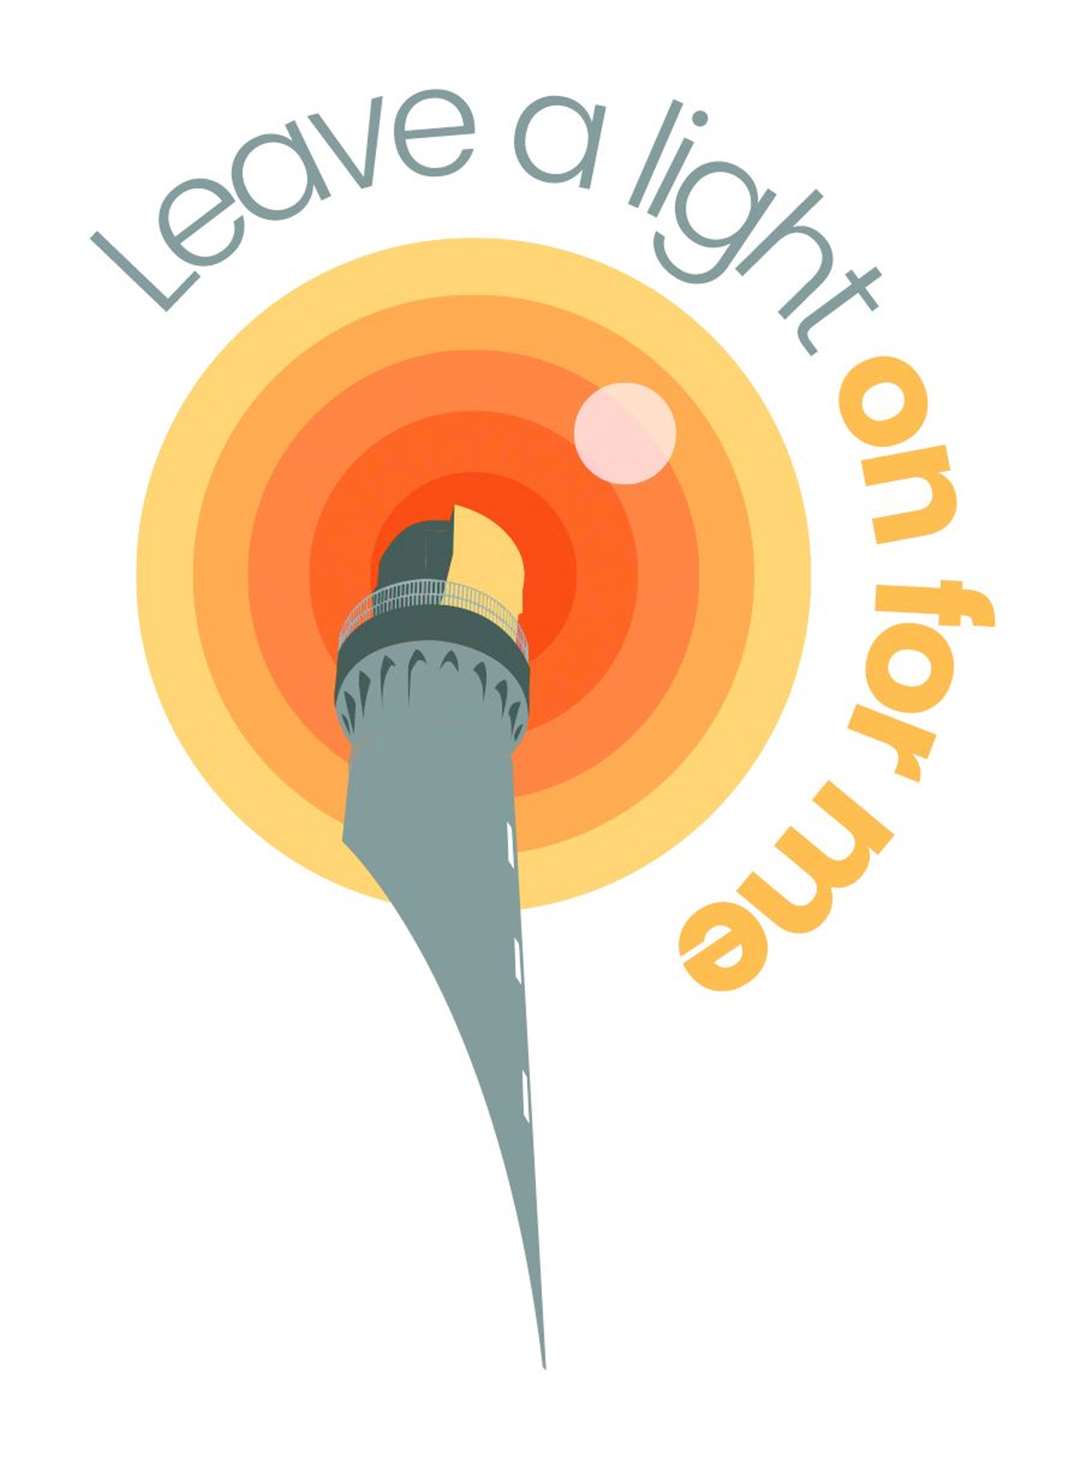 Leave a light on logo